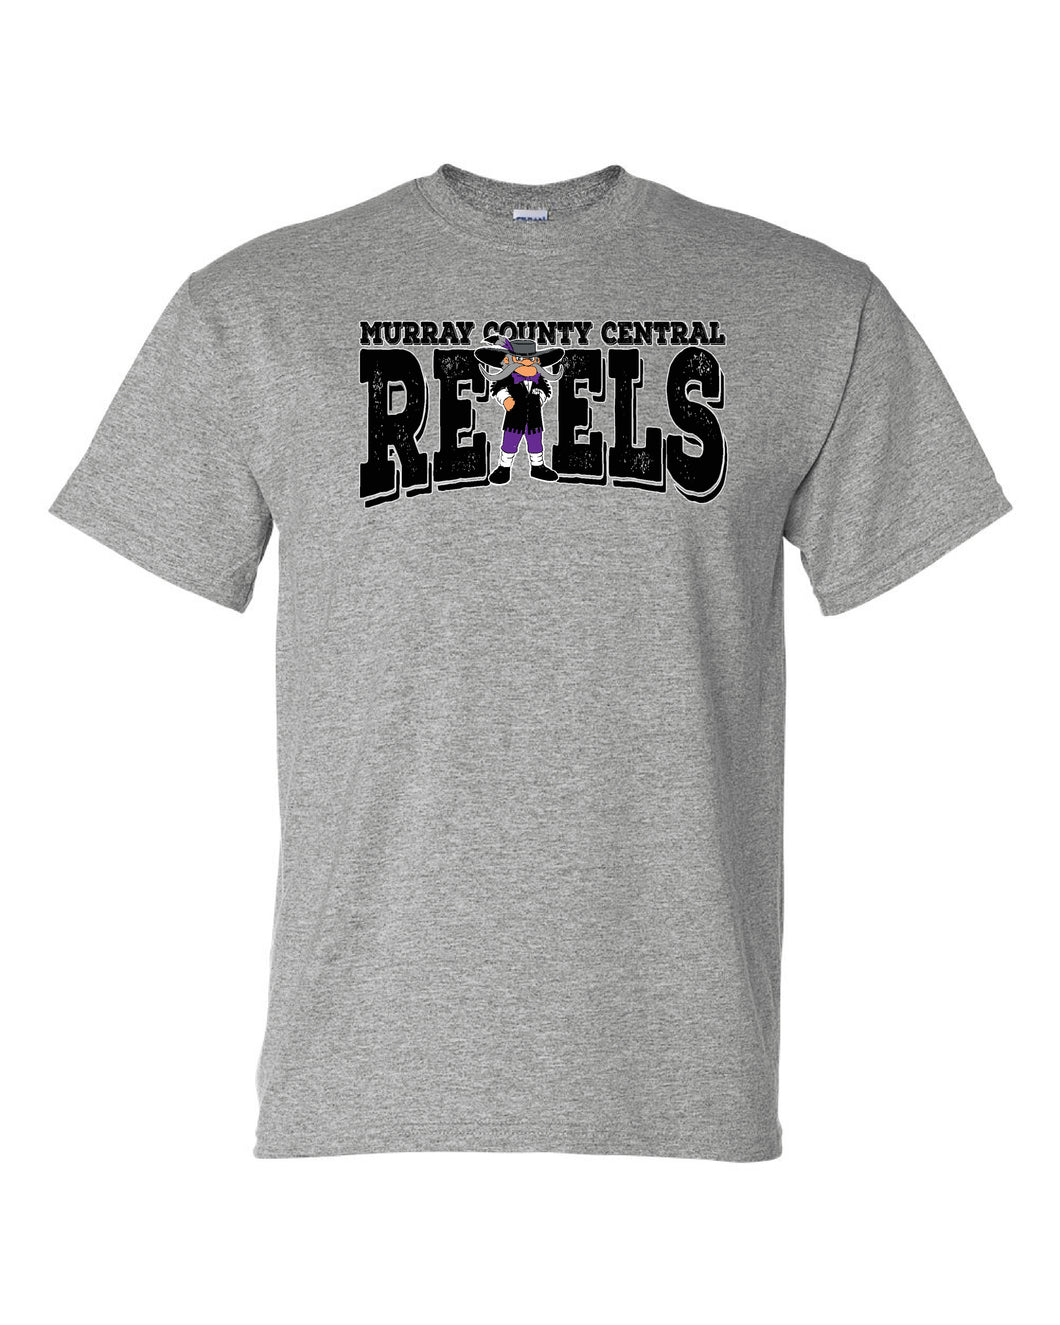 MCC Rebels Rudy Gildan Tshirt - Grey